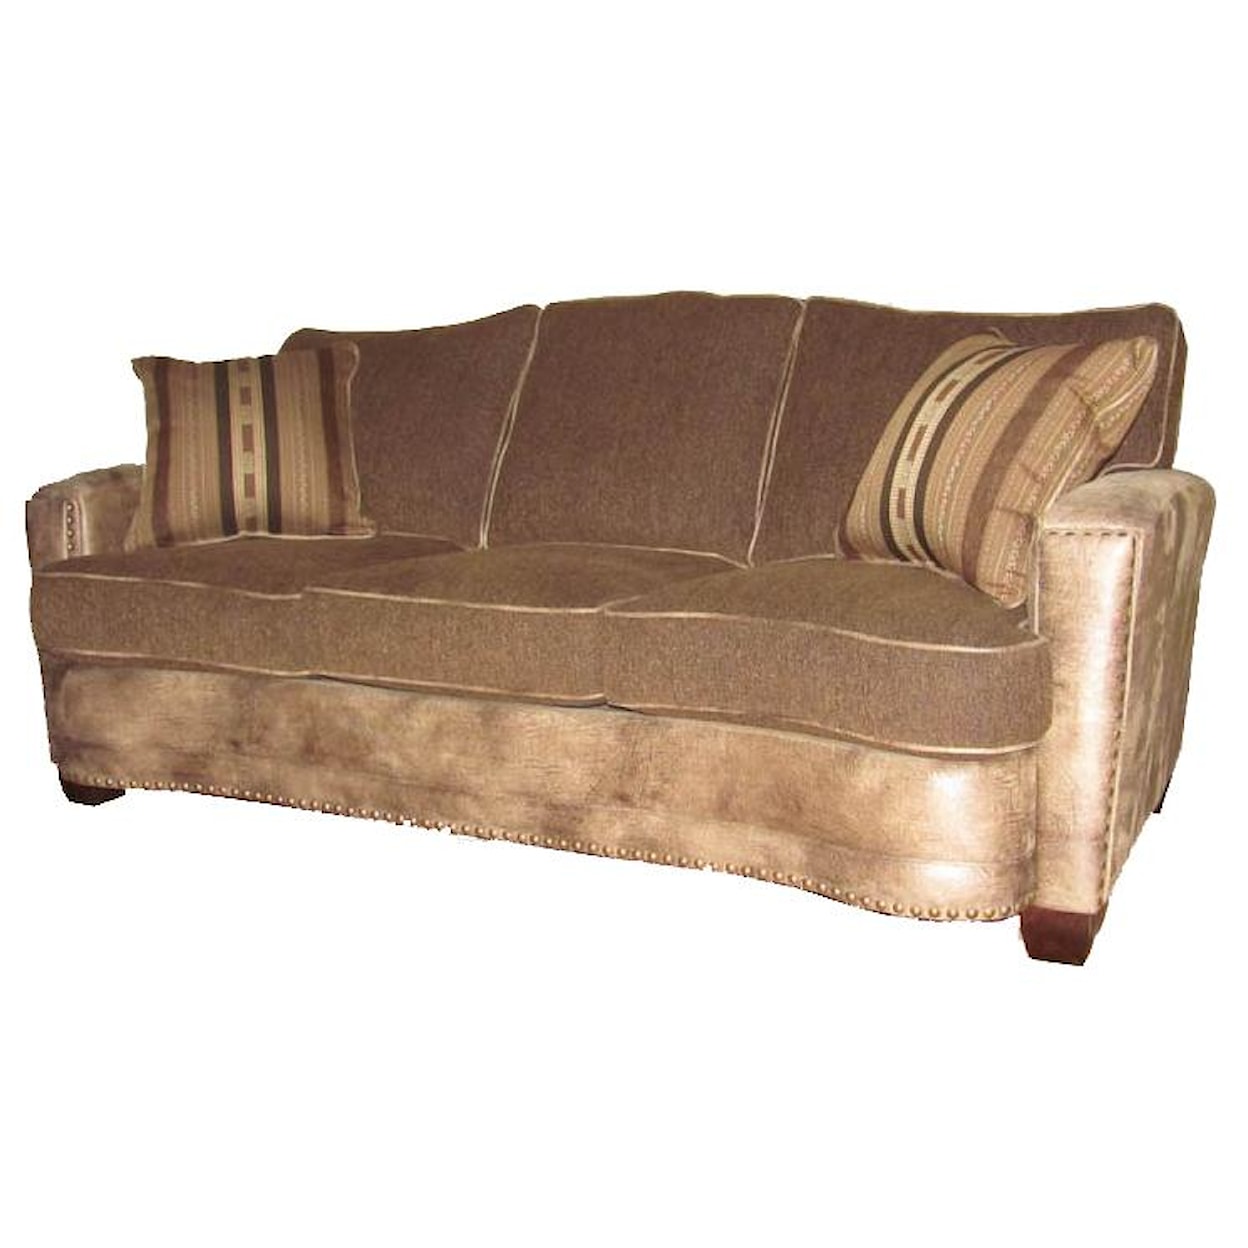 Marshfield Hollister Sofa